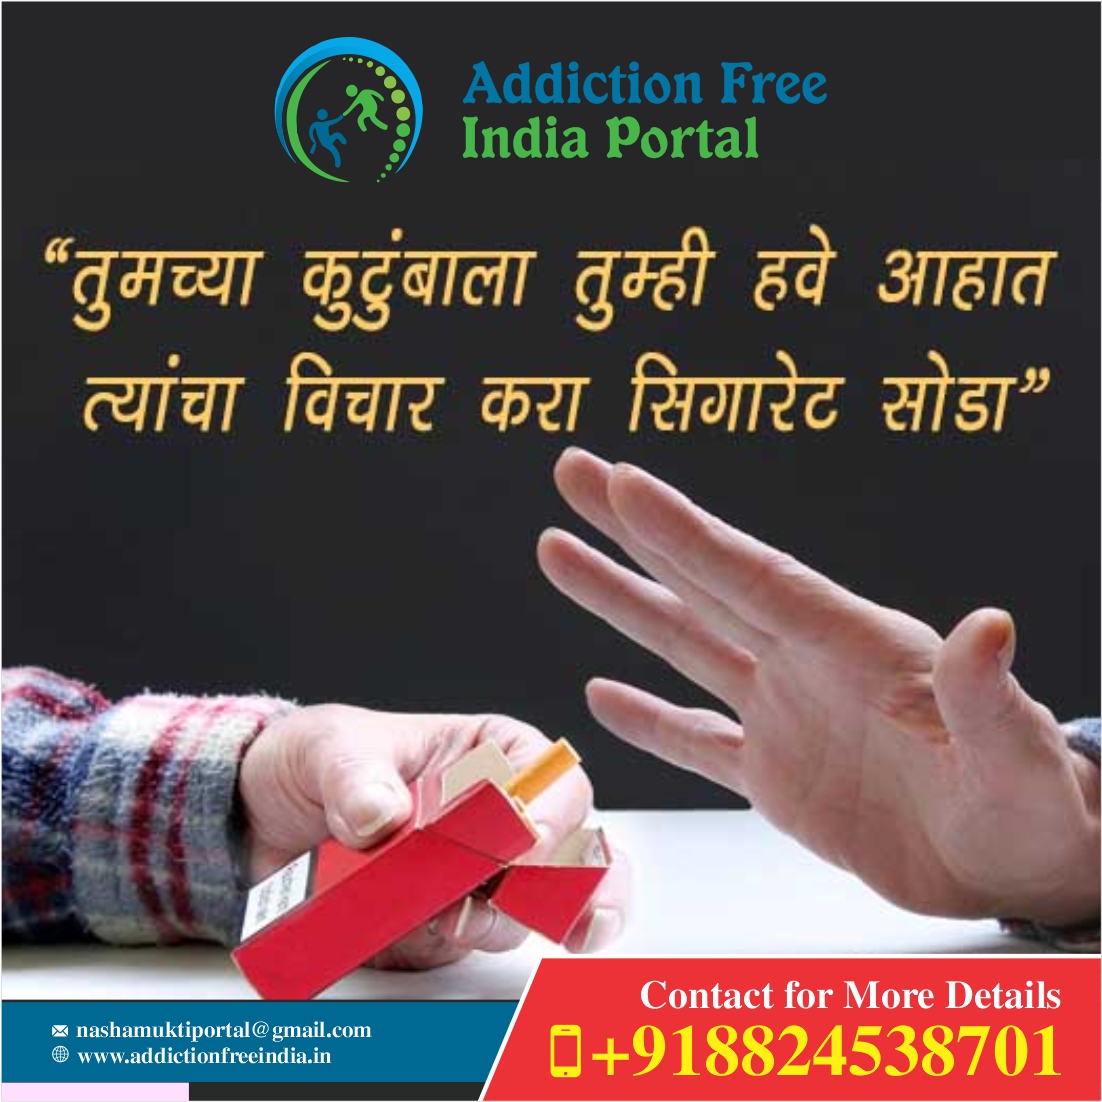 Dr. Dixit’s De-Addiction clinic / Center in Lucknow